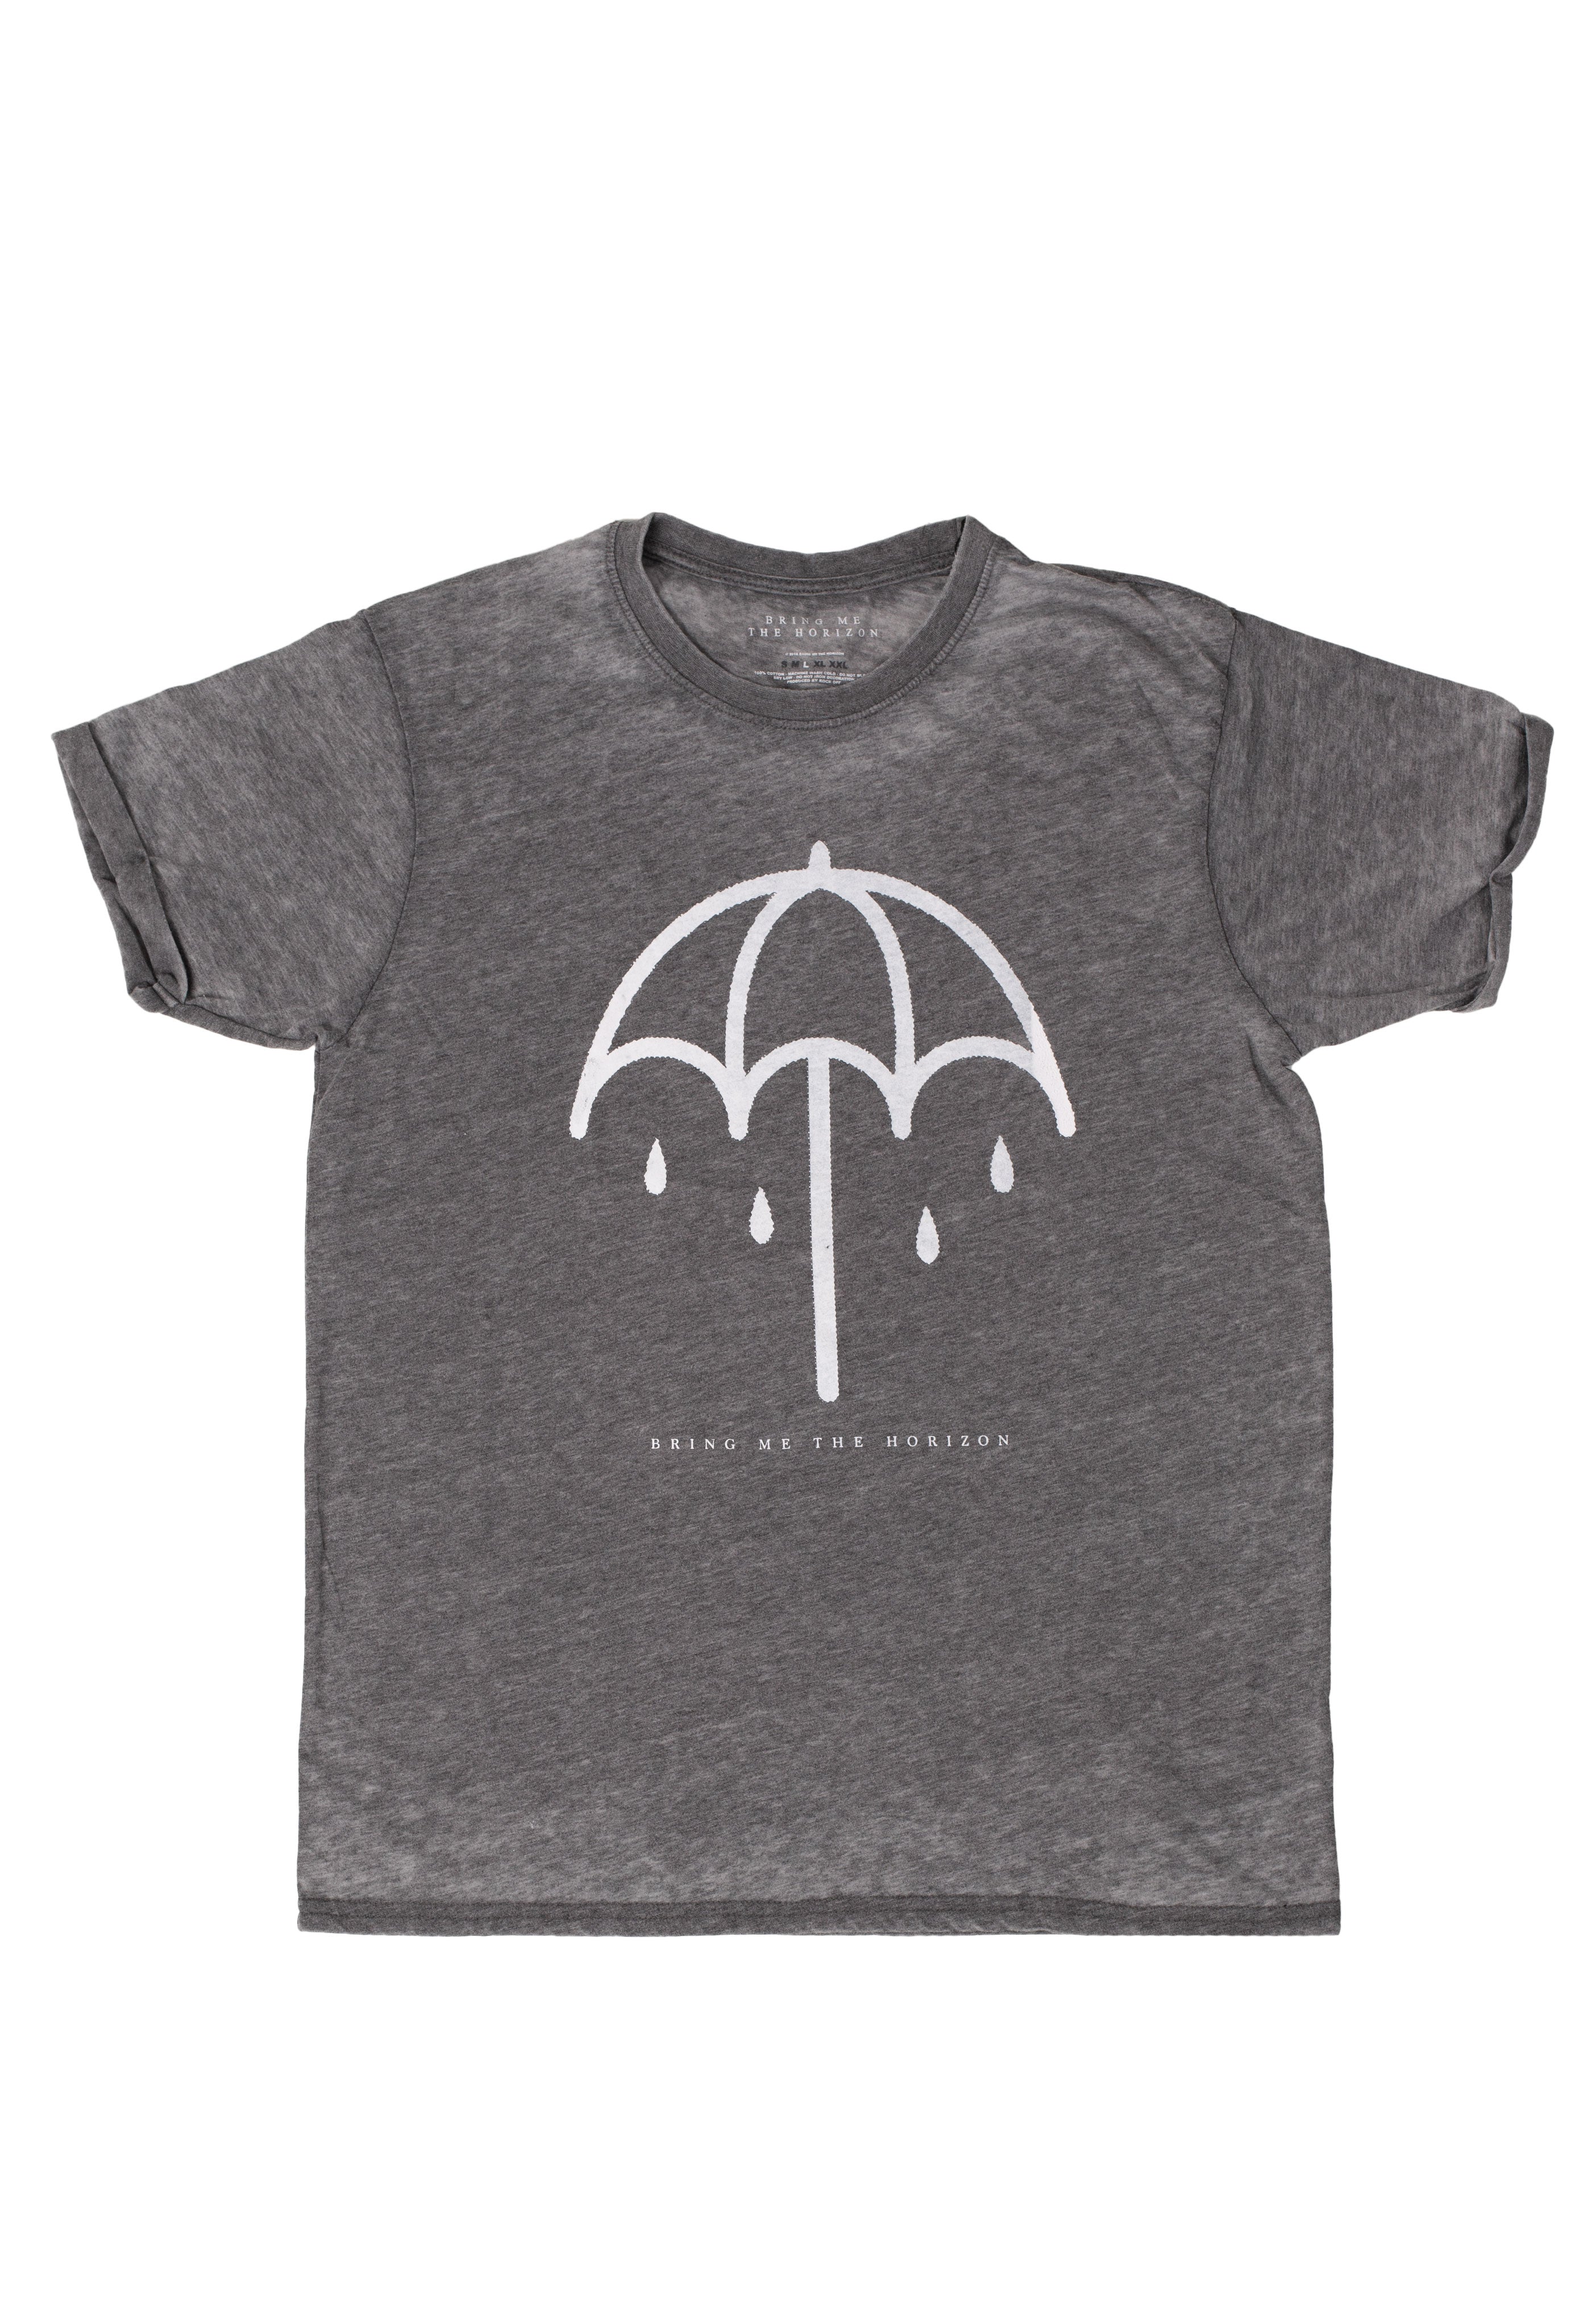 Bring Me The Horizon - Umbrella BO - T-Shirt